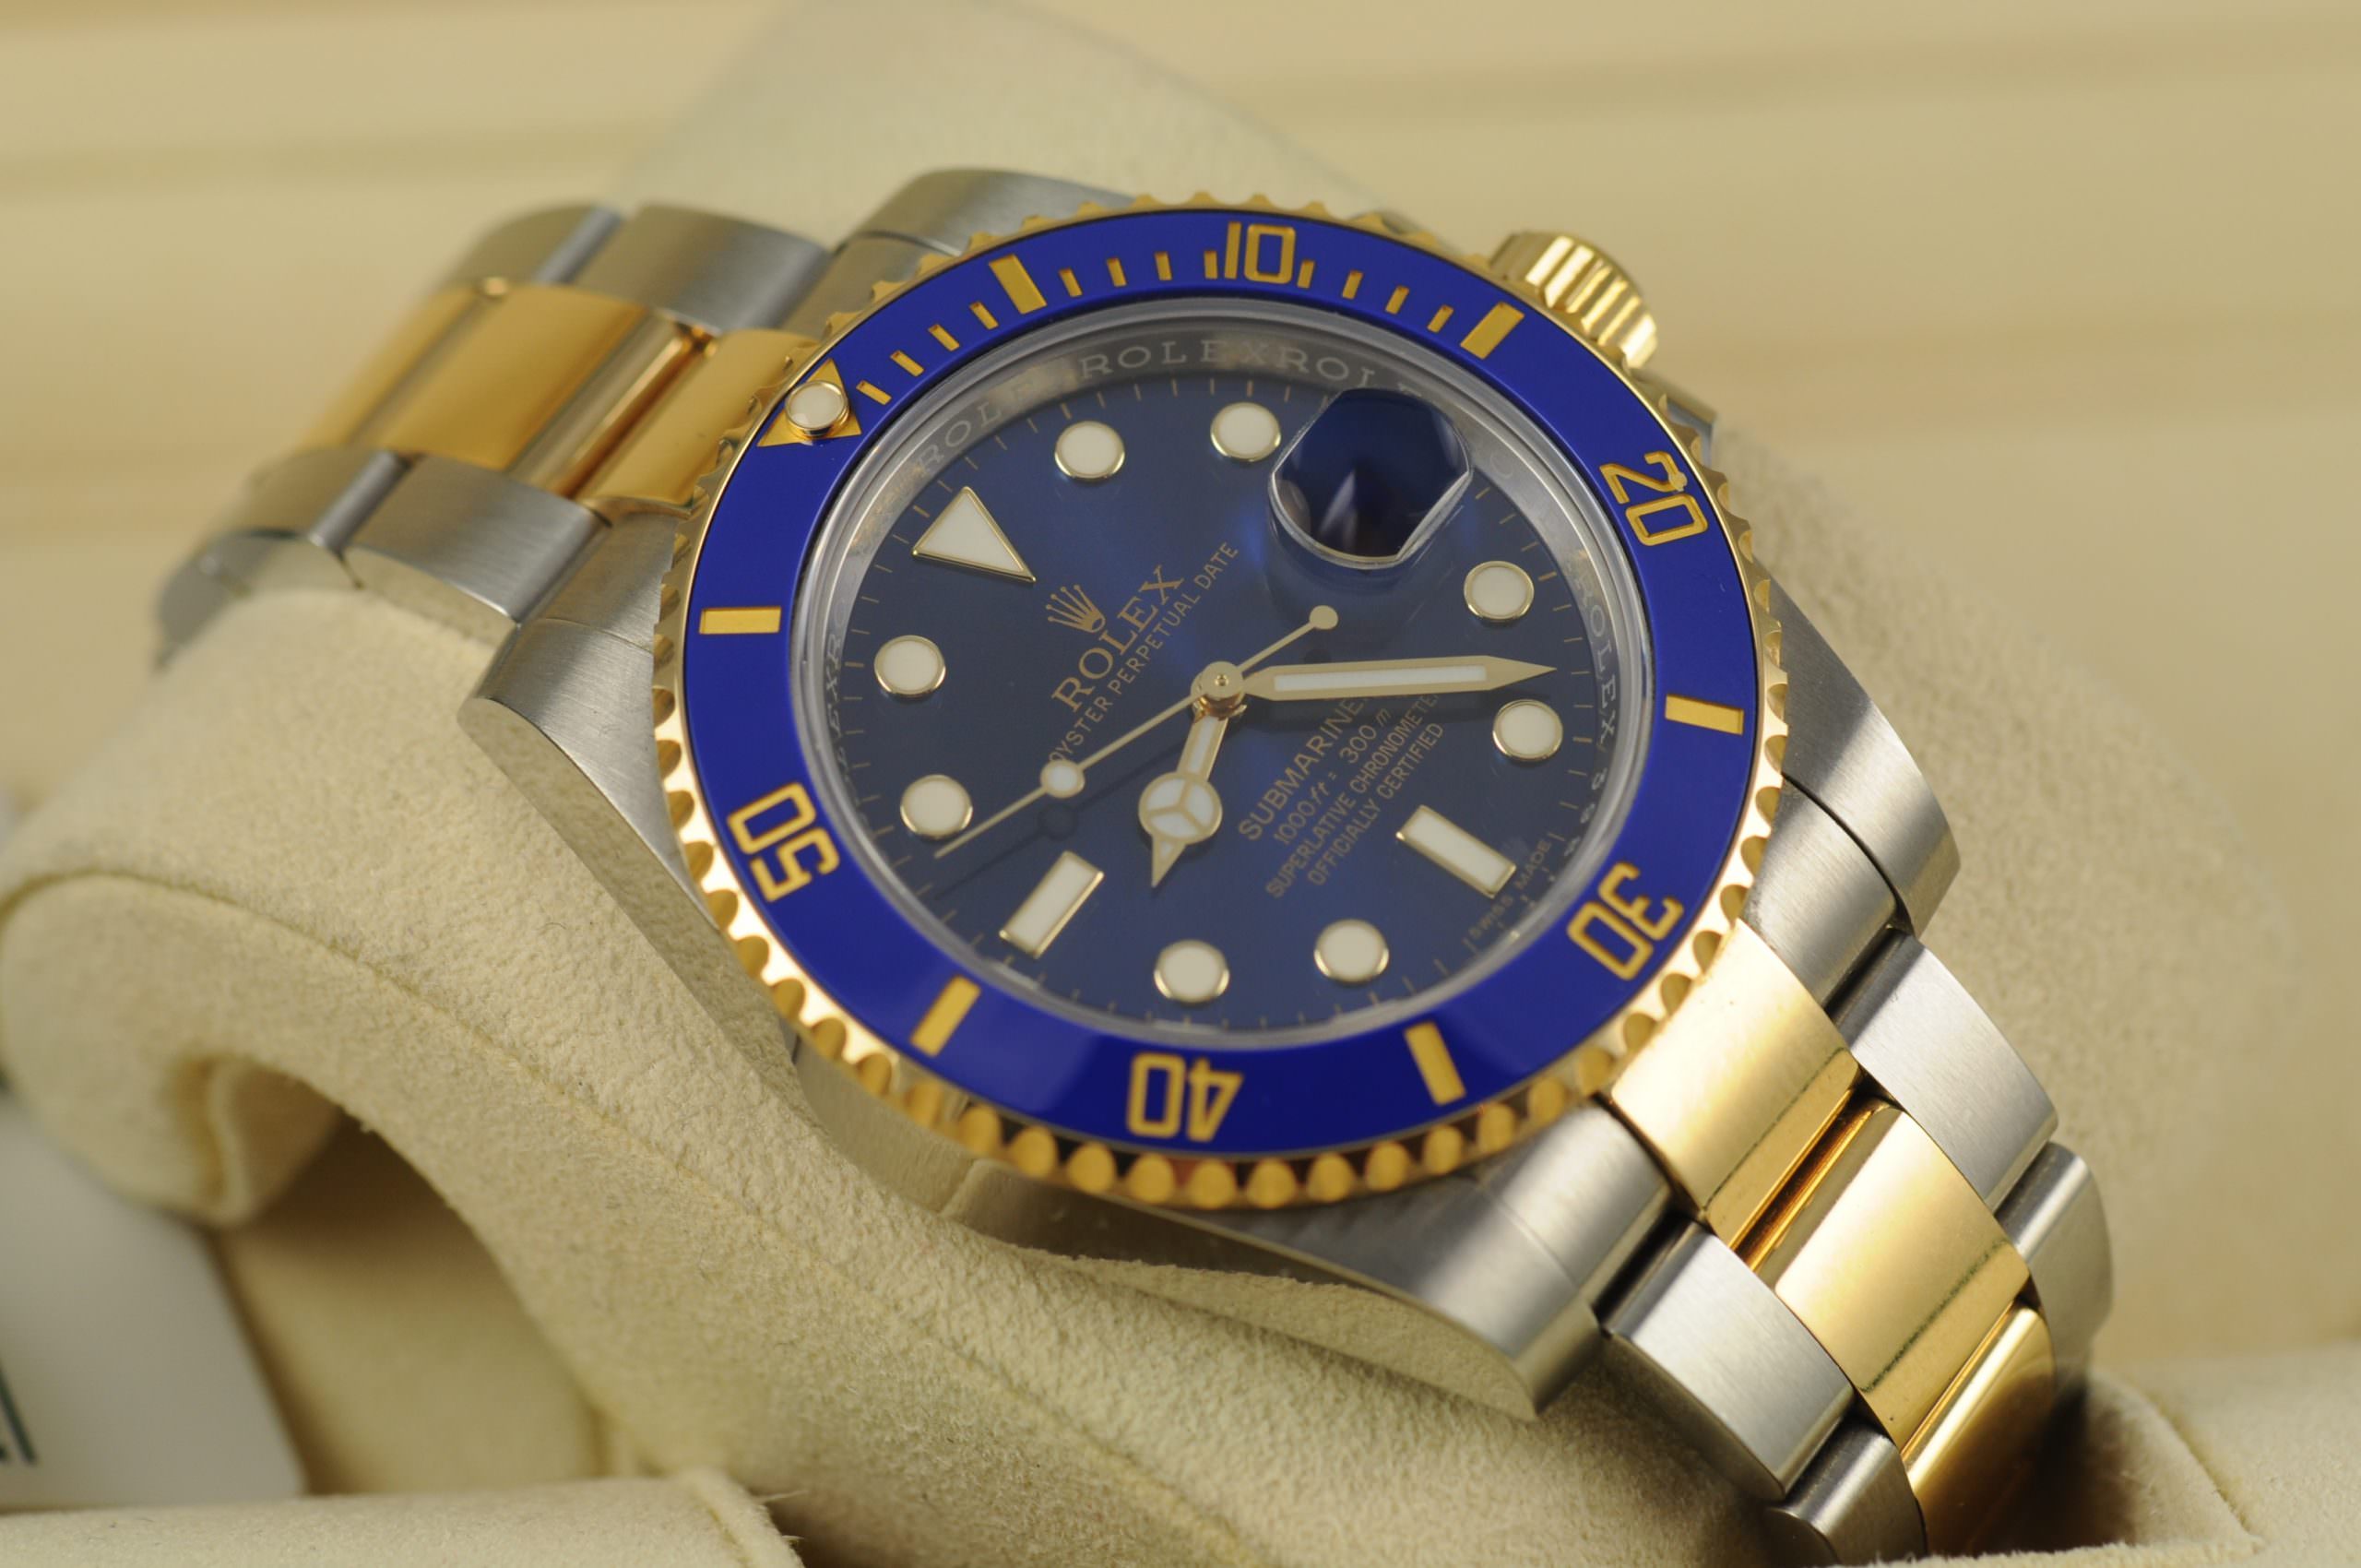 Rolex Submariner Date 116613LB - Edinburgh Watch Company